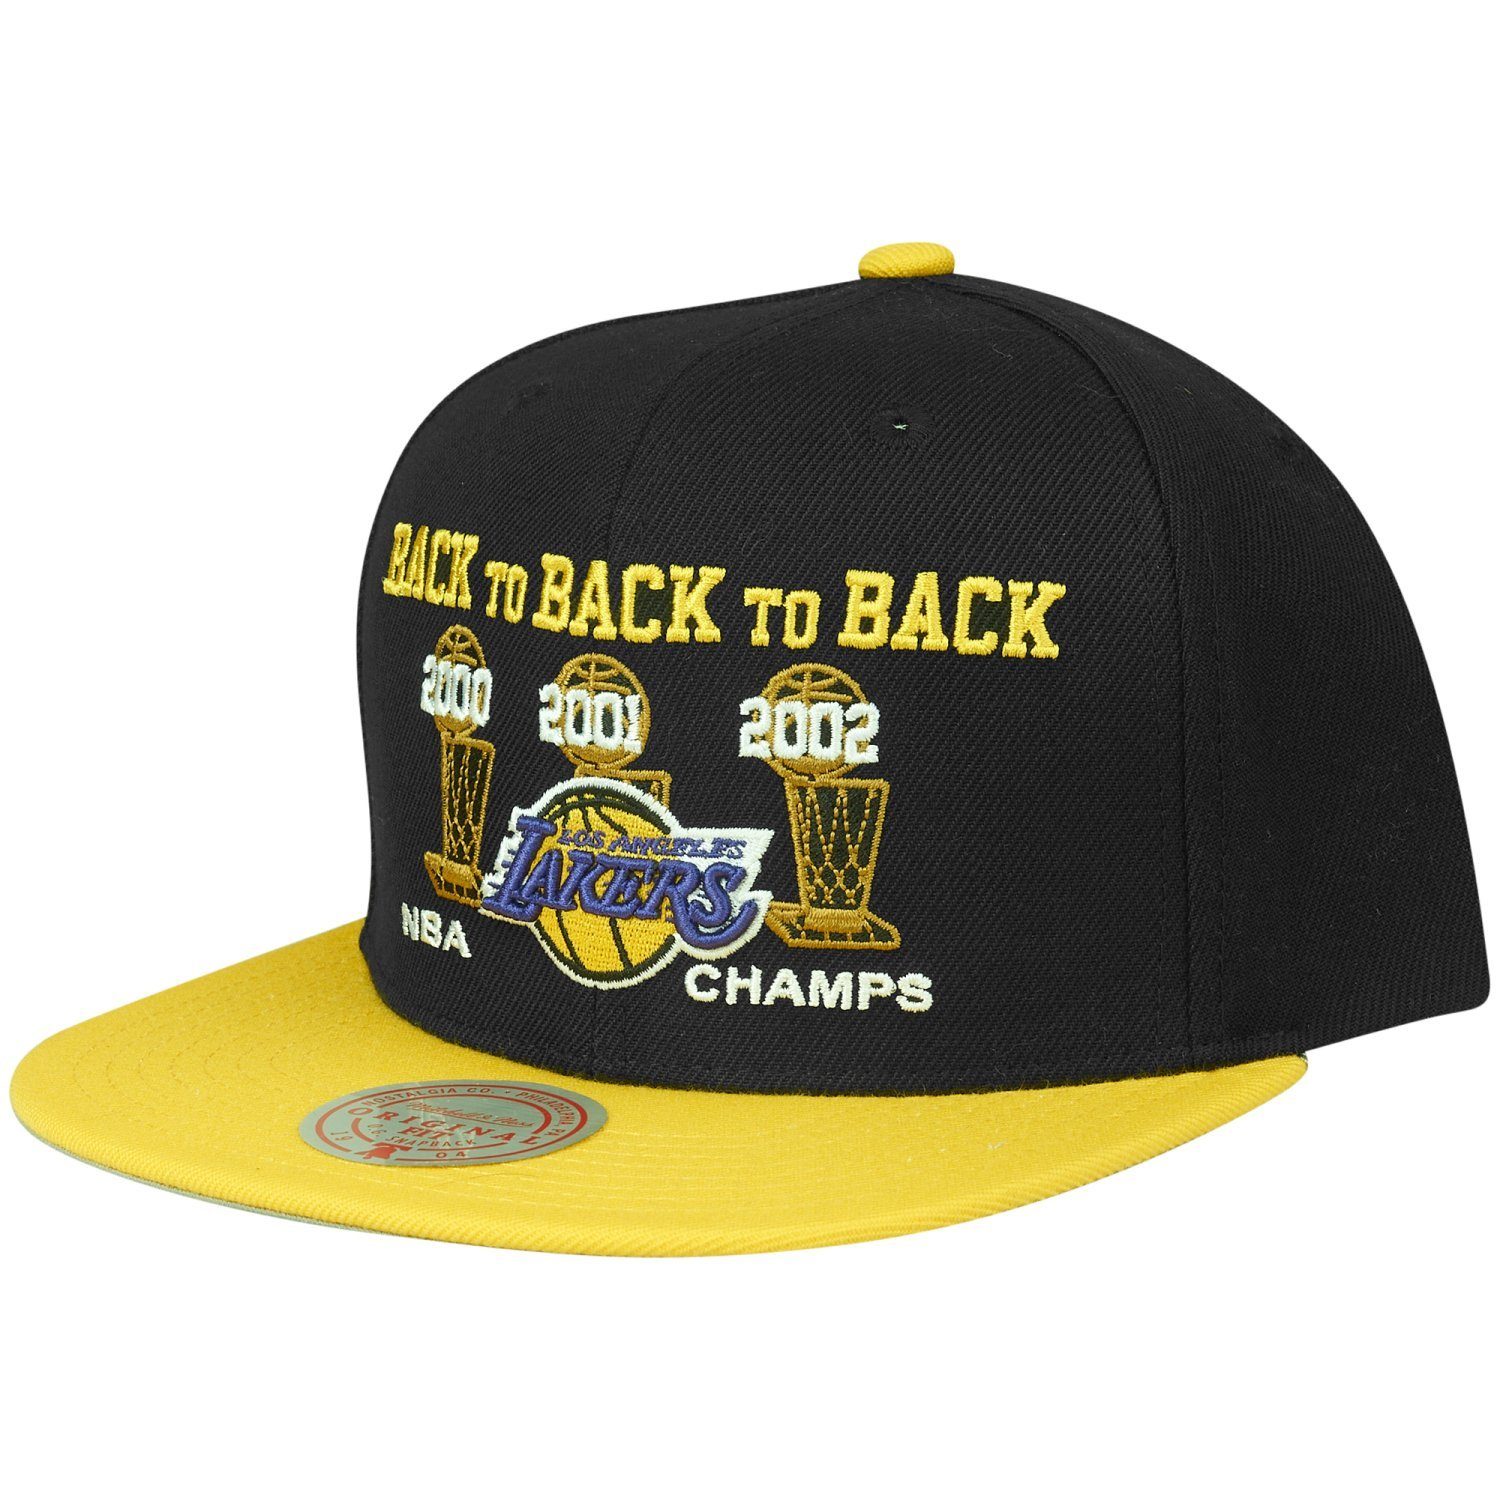 Mitchell & Ness Snapback Cap Los Angeles Lakers 20002003